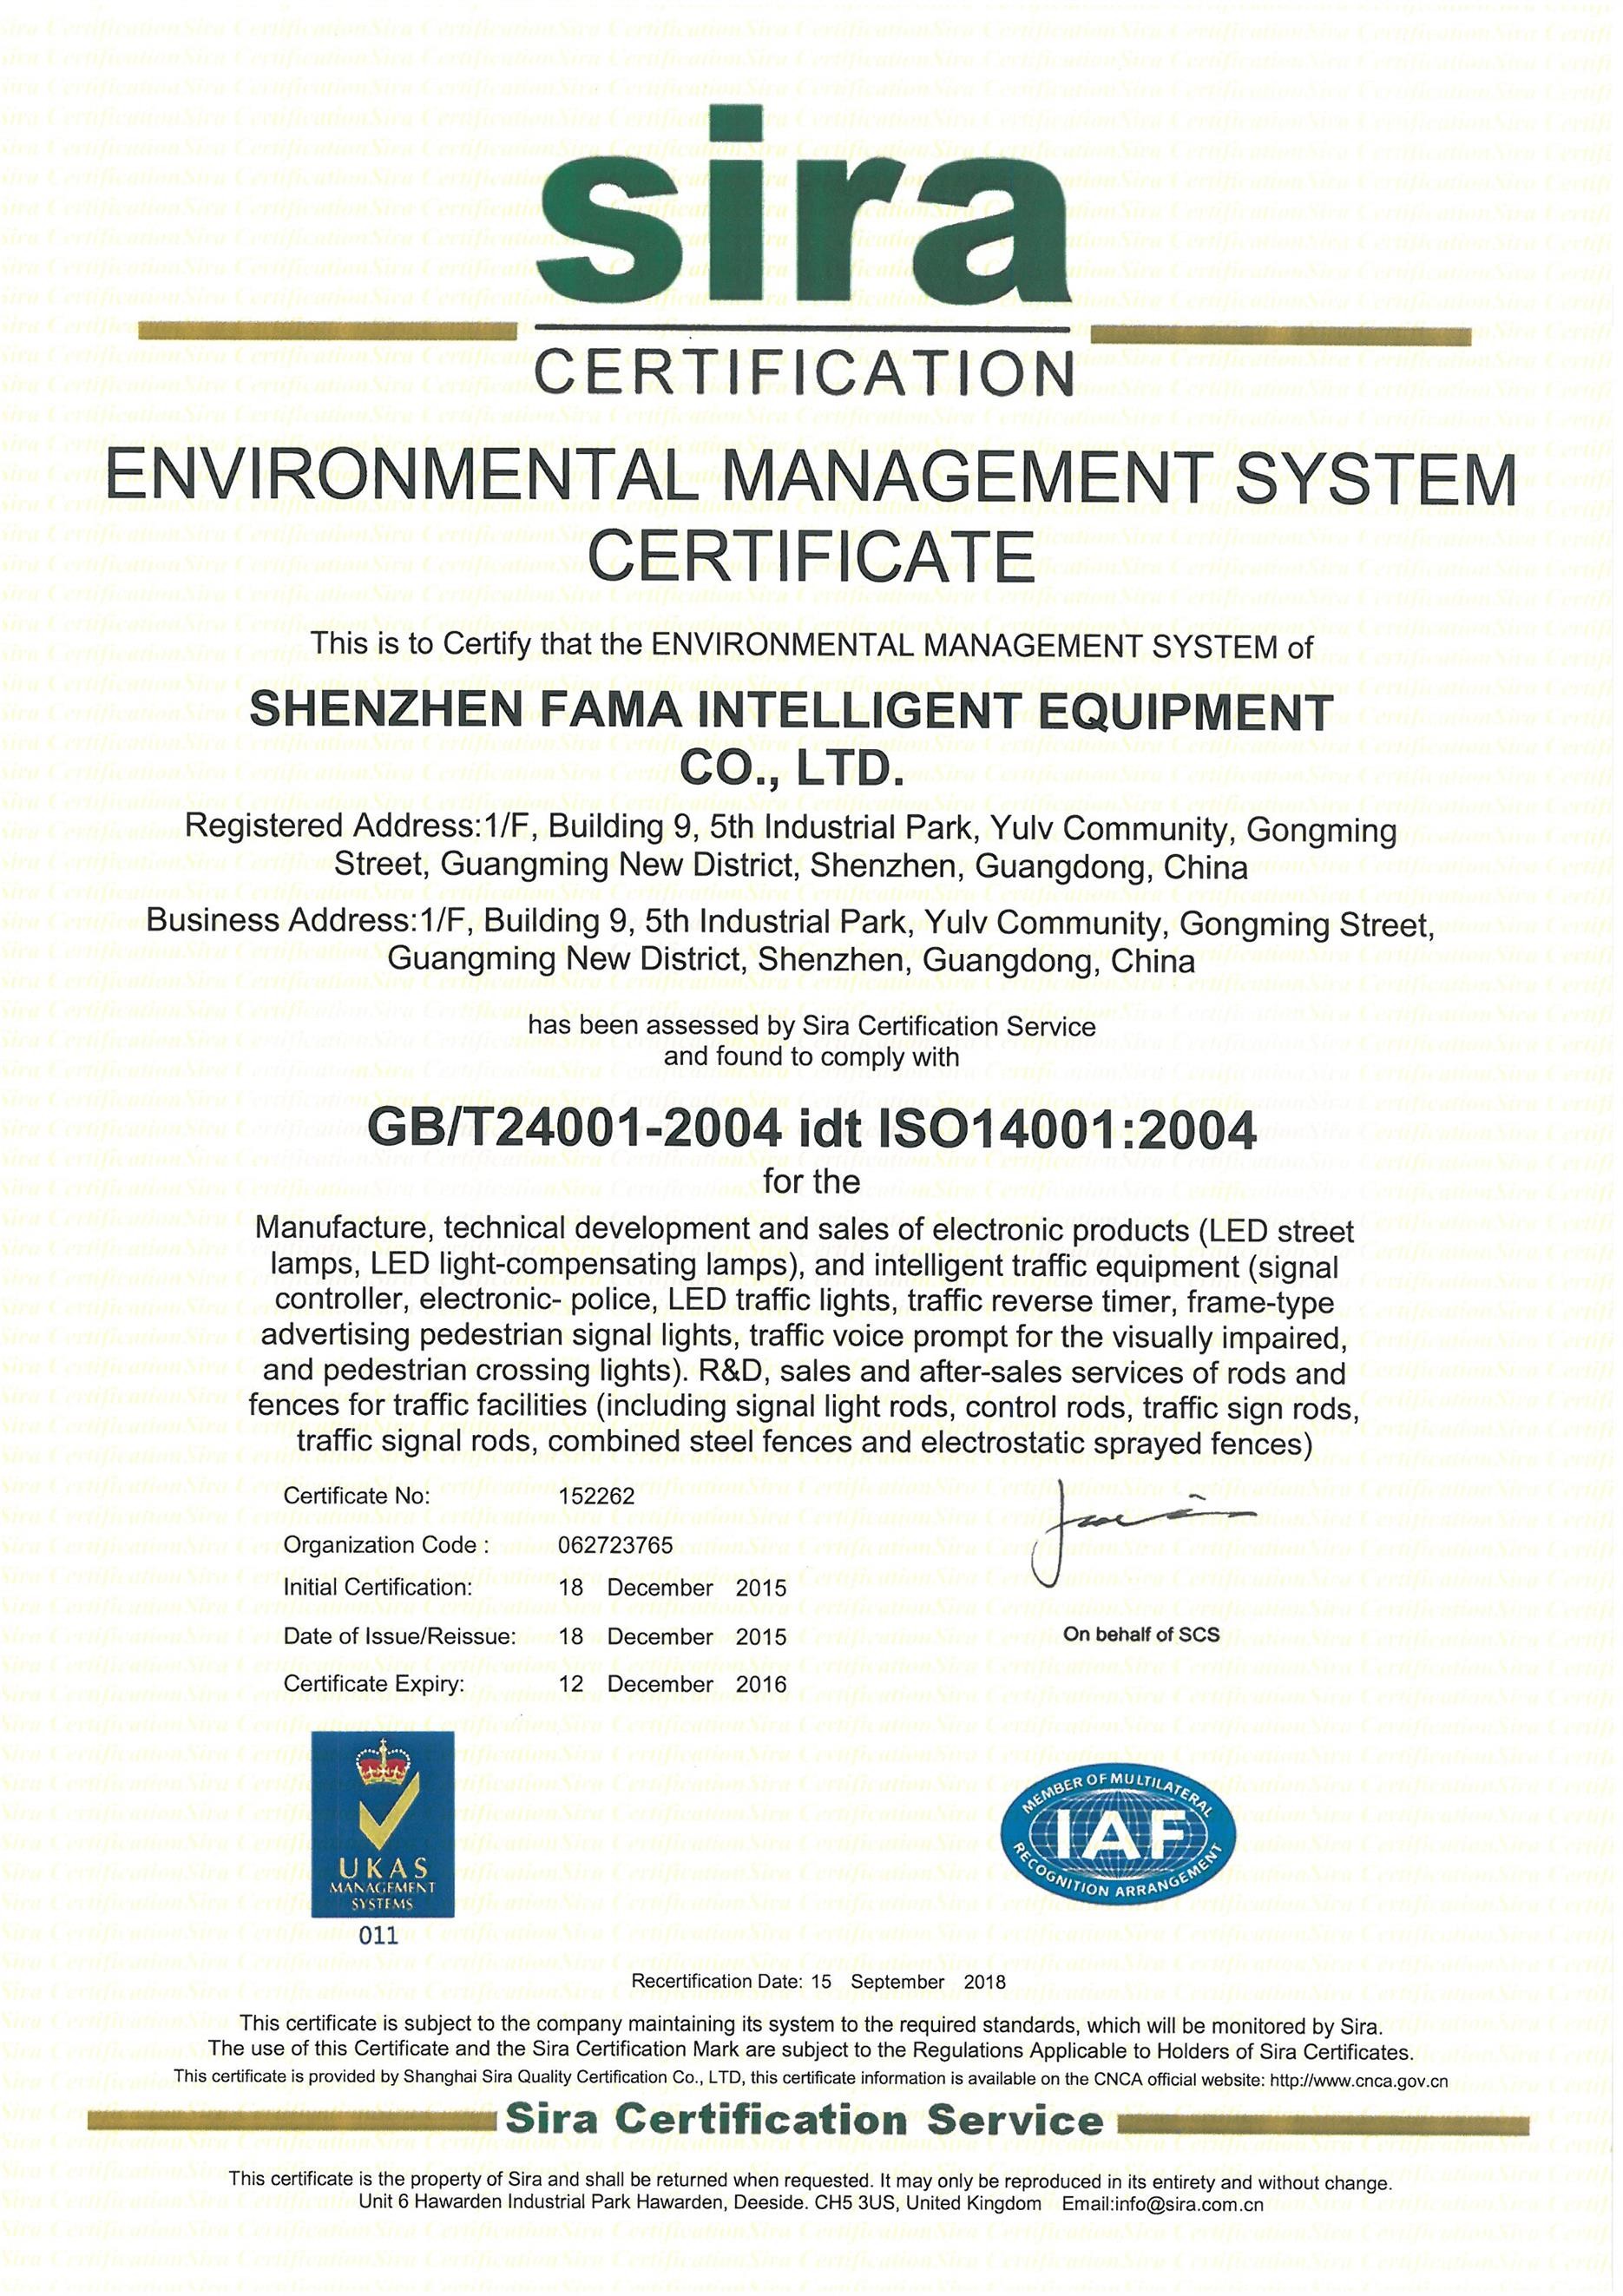 Shenzhen Fama Intelligent Equipment Co., Ltd. (Chevy Light) Certifications